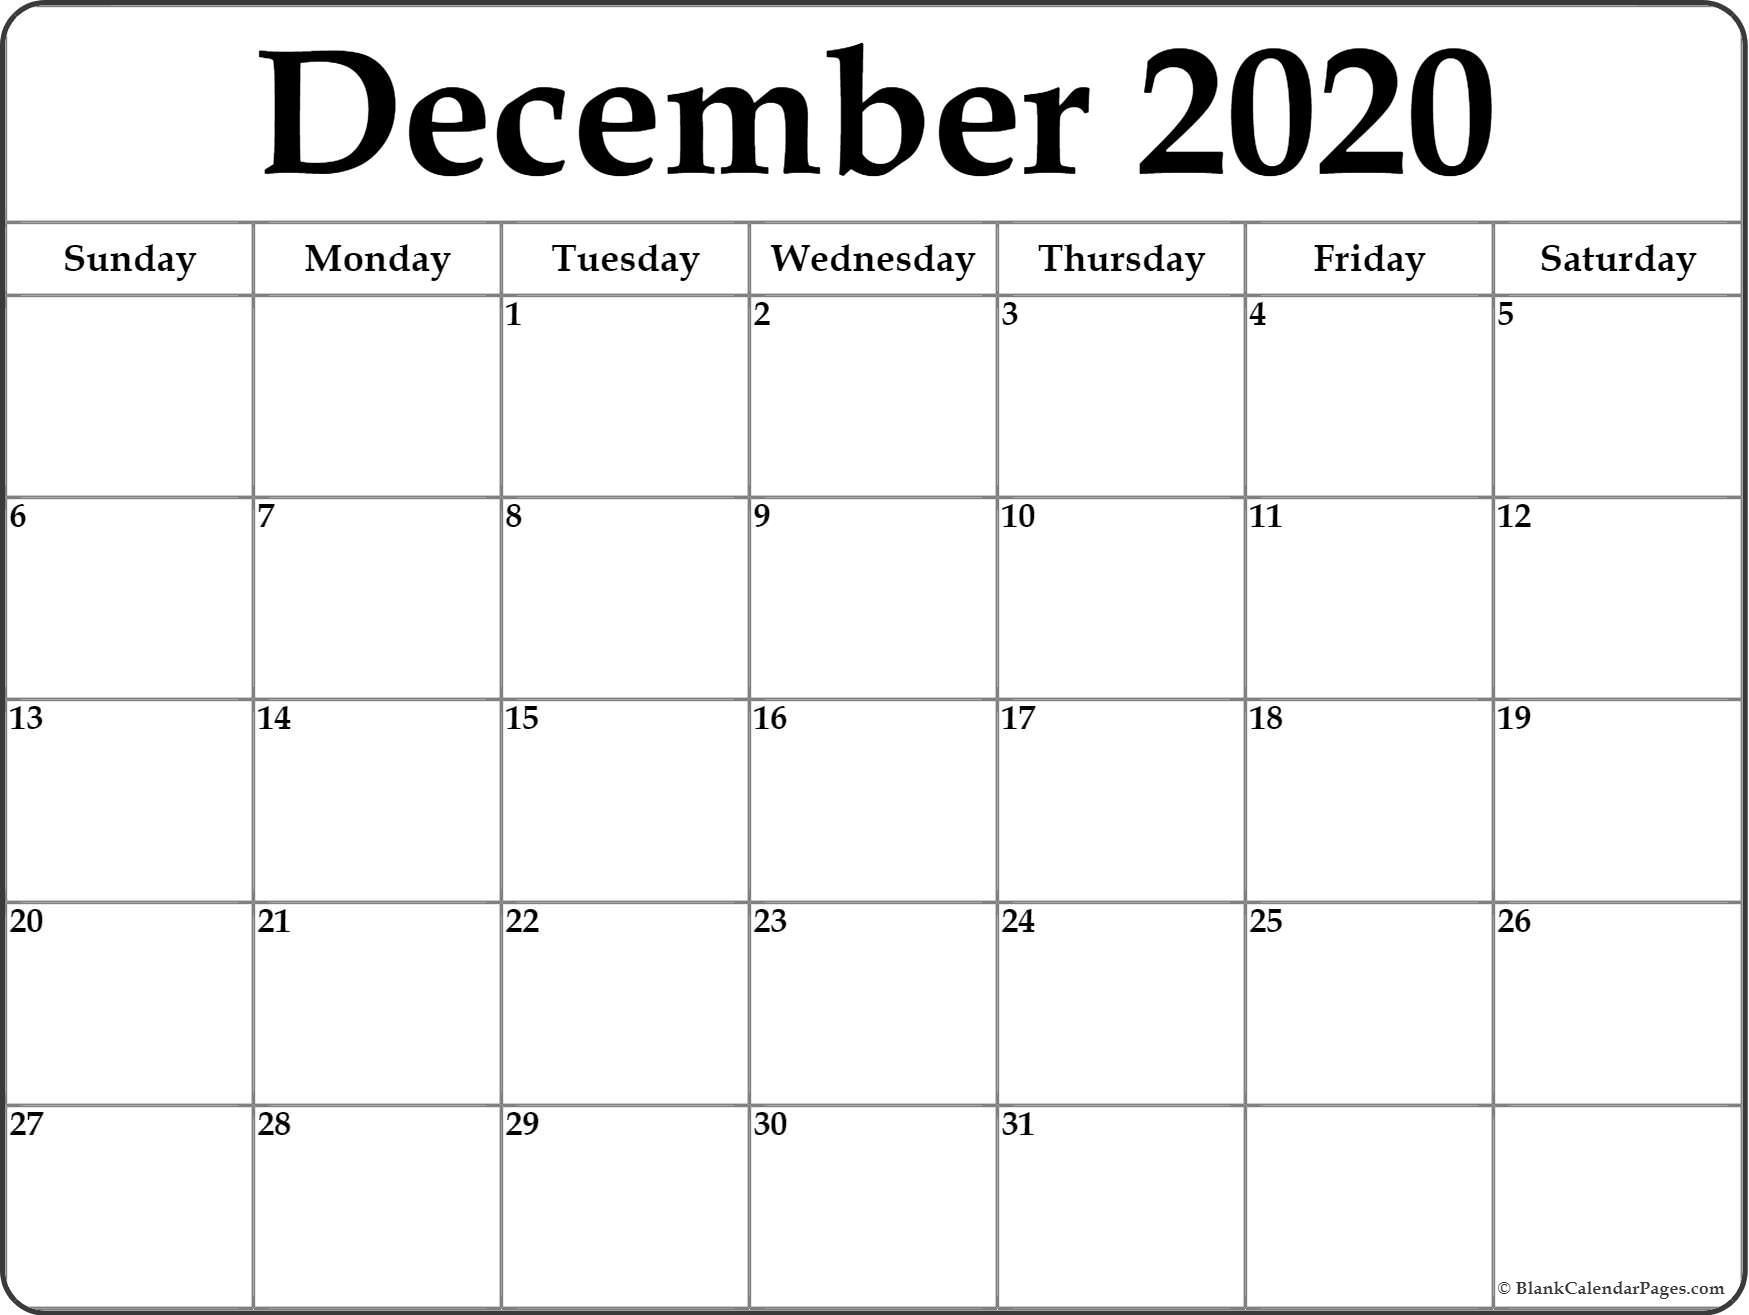 December 2020 Calendar | Free Printable Monthly Calendars Extraordinary Free Monthly Calendar Jan Till Dec 2020 Printable Free